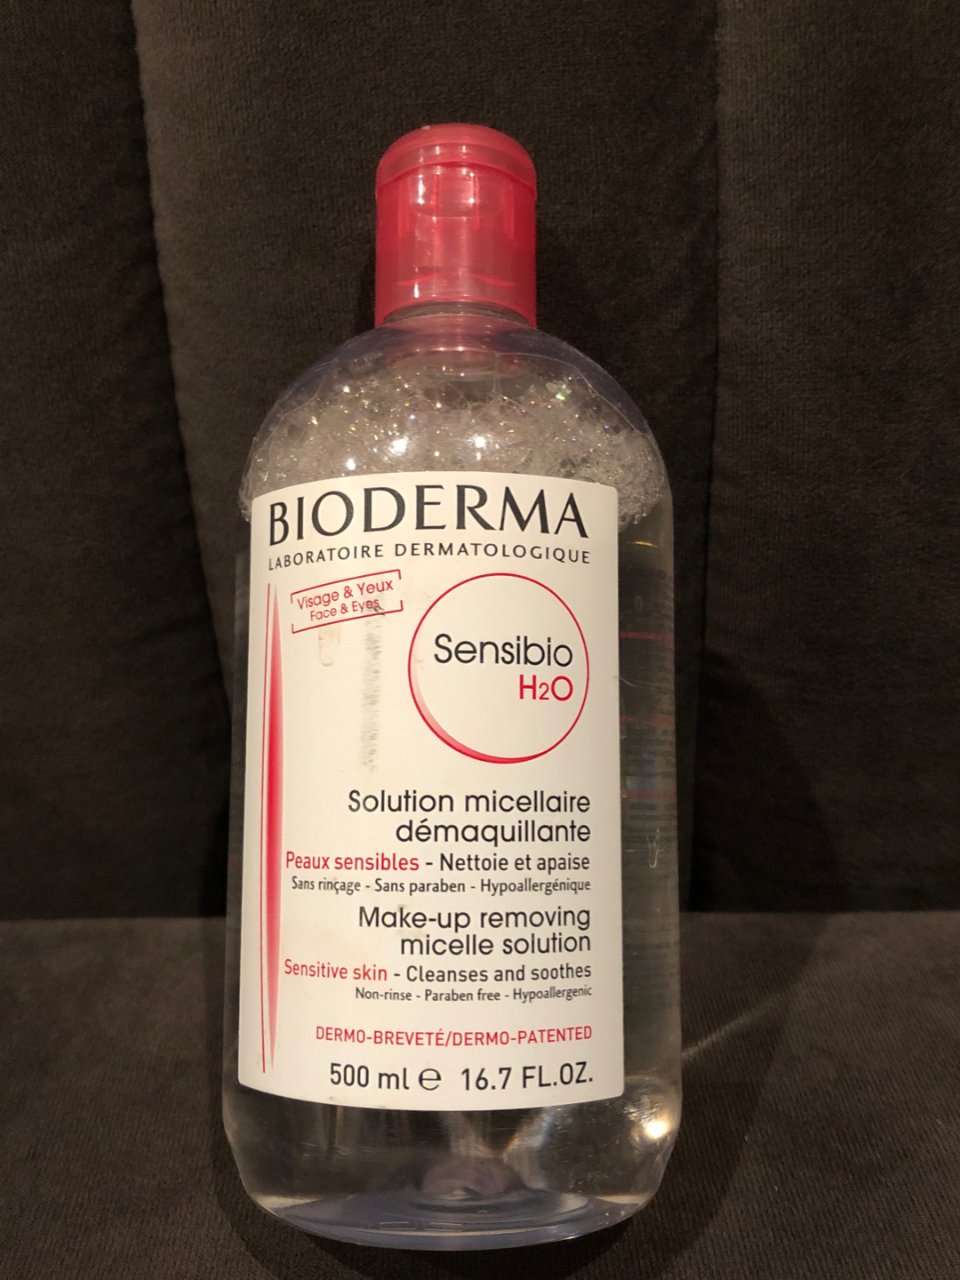 Bioderma 贝德玛,贝德玛卸妆水